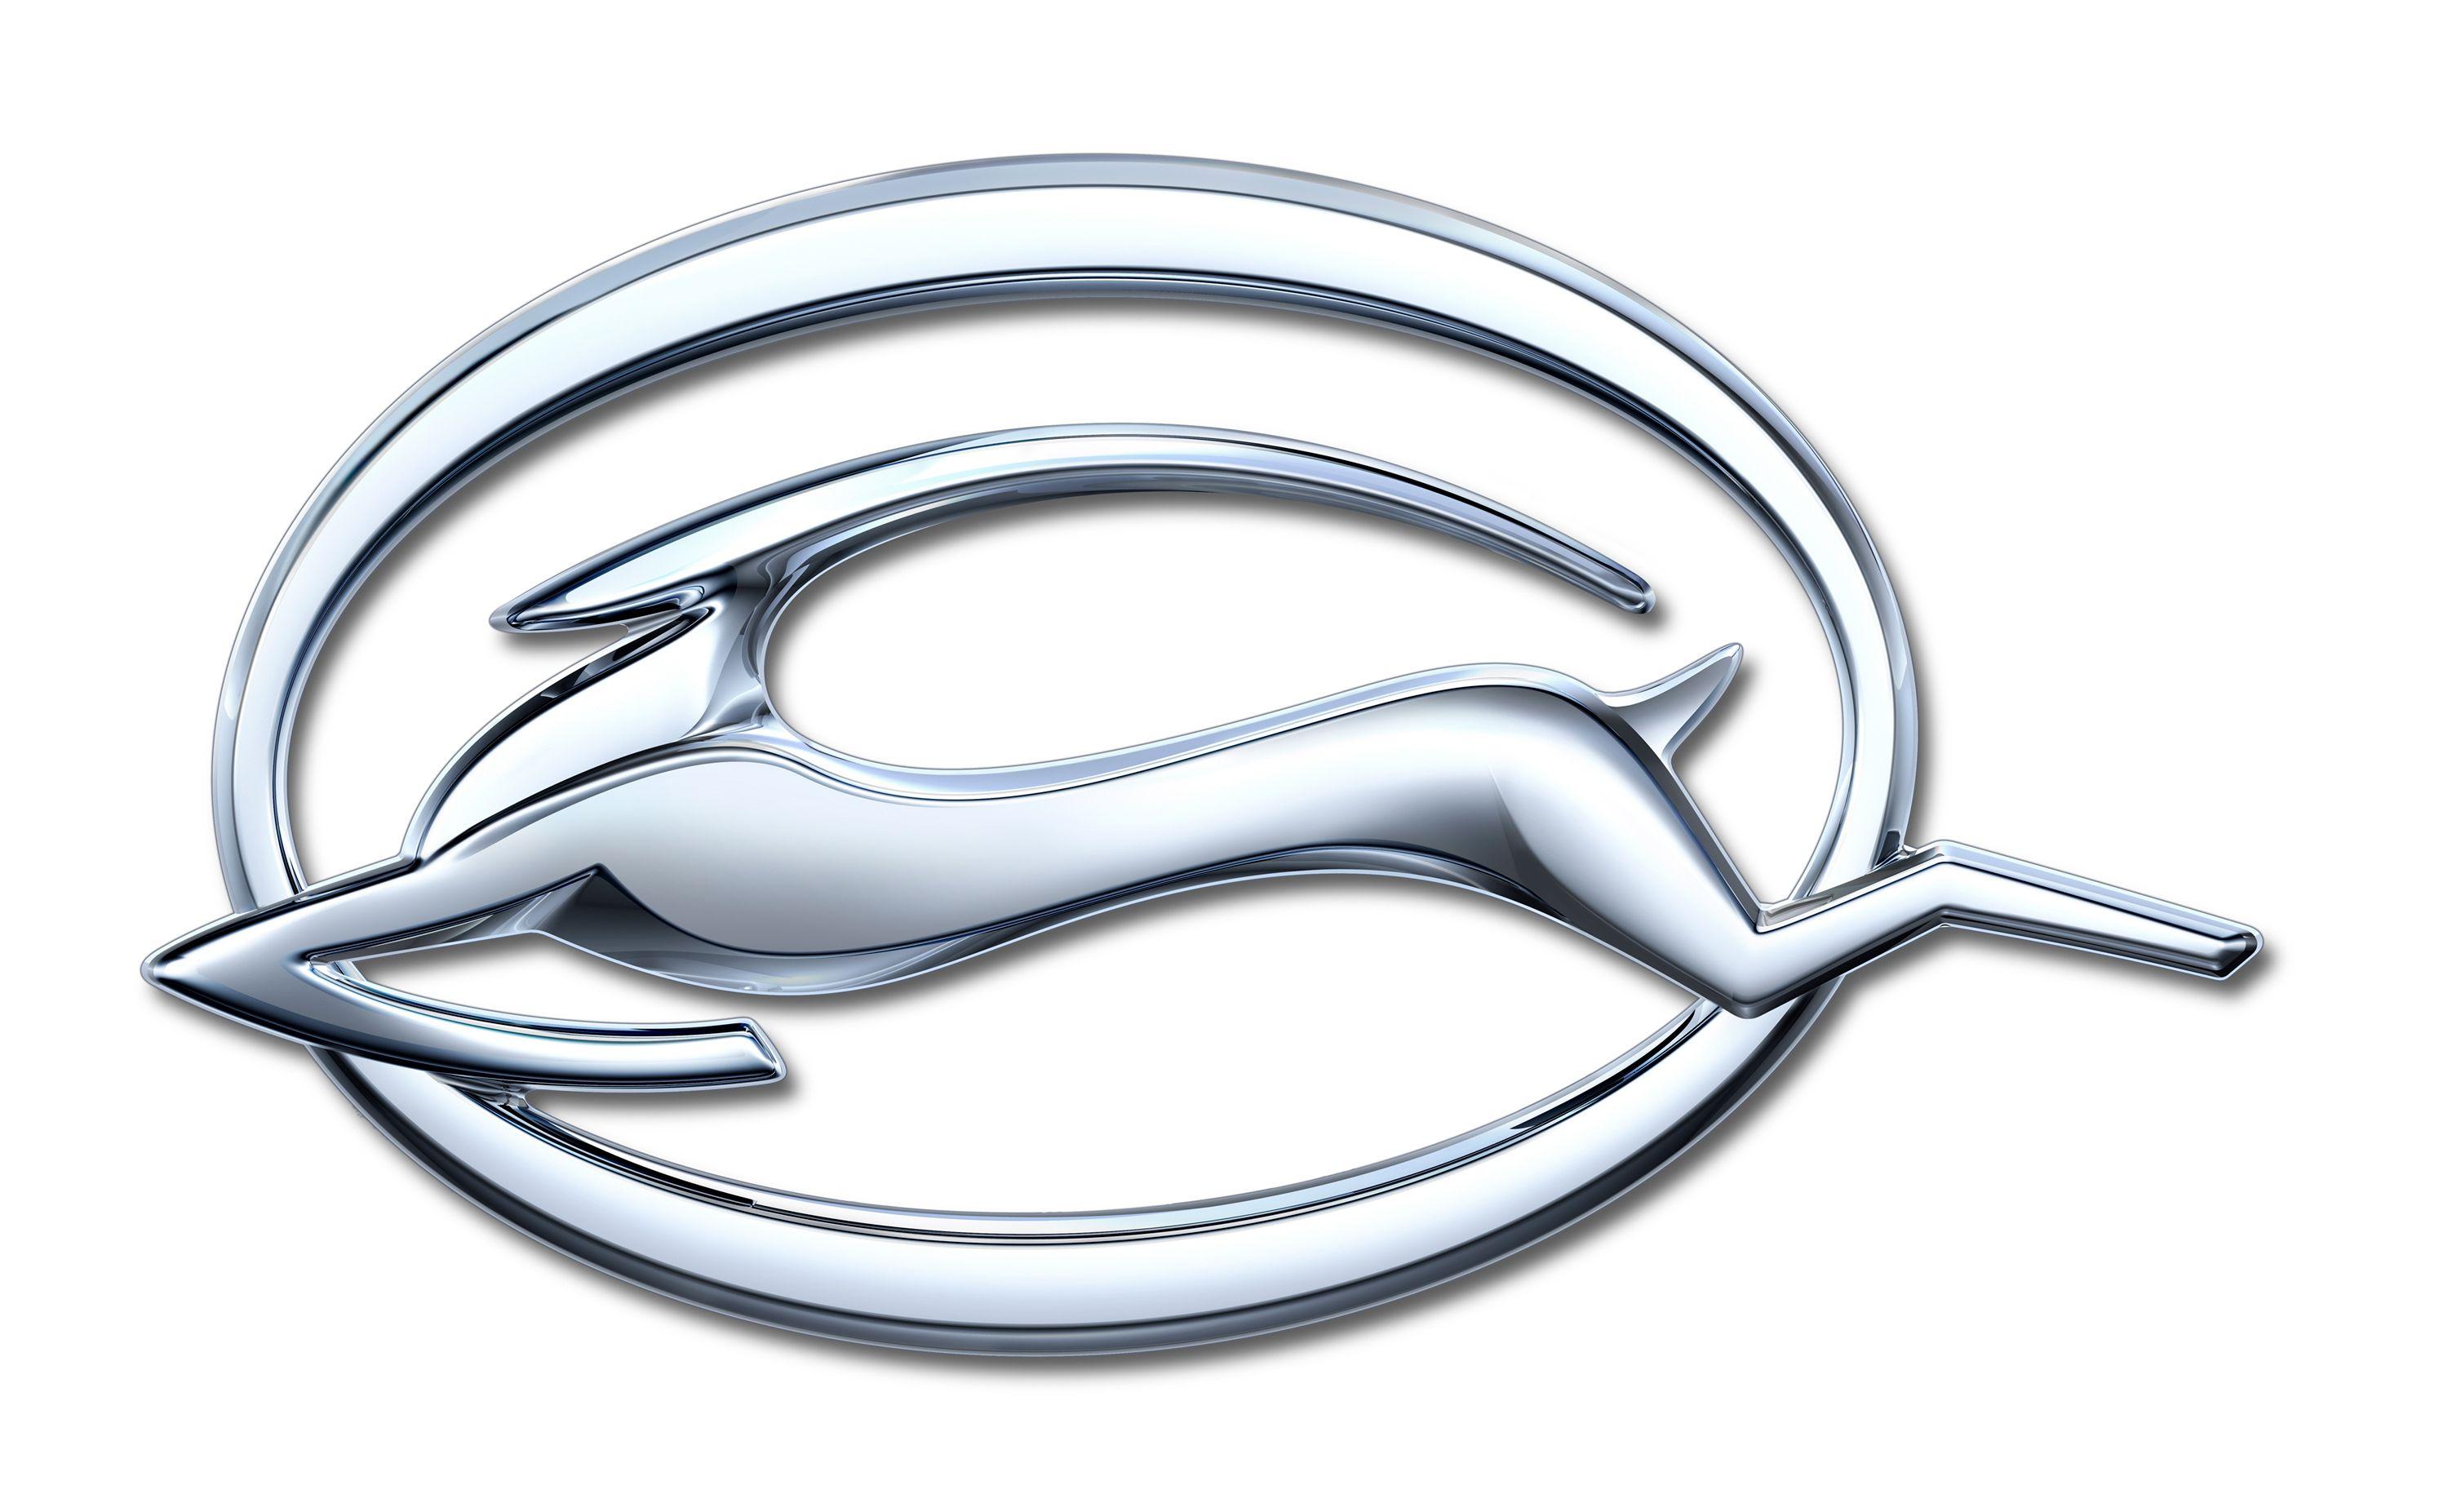 Chevrolet Car Logo - Impala Emblem Design Leaps Forward with New Model